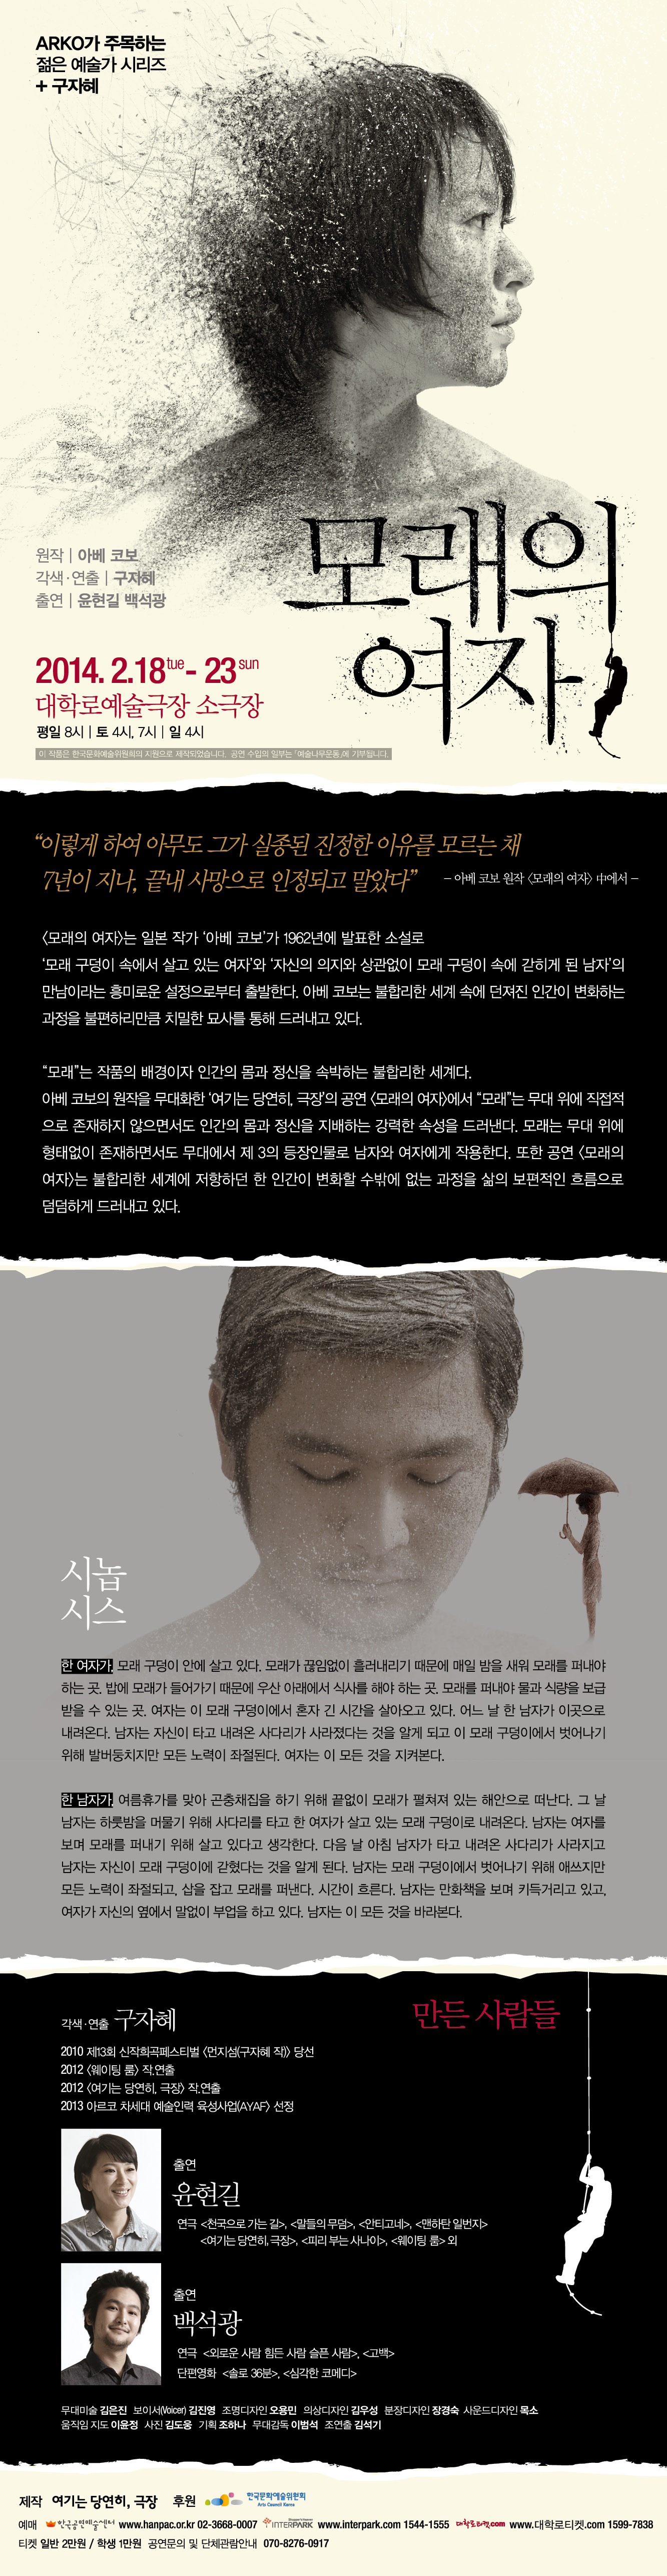 ARKO가 주목하는 젊은 예술가 시리즈+구자혜_연극 모래의 여자 이미지